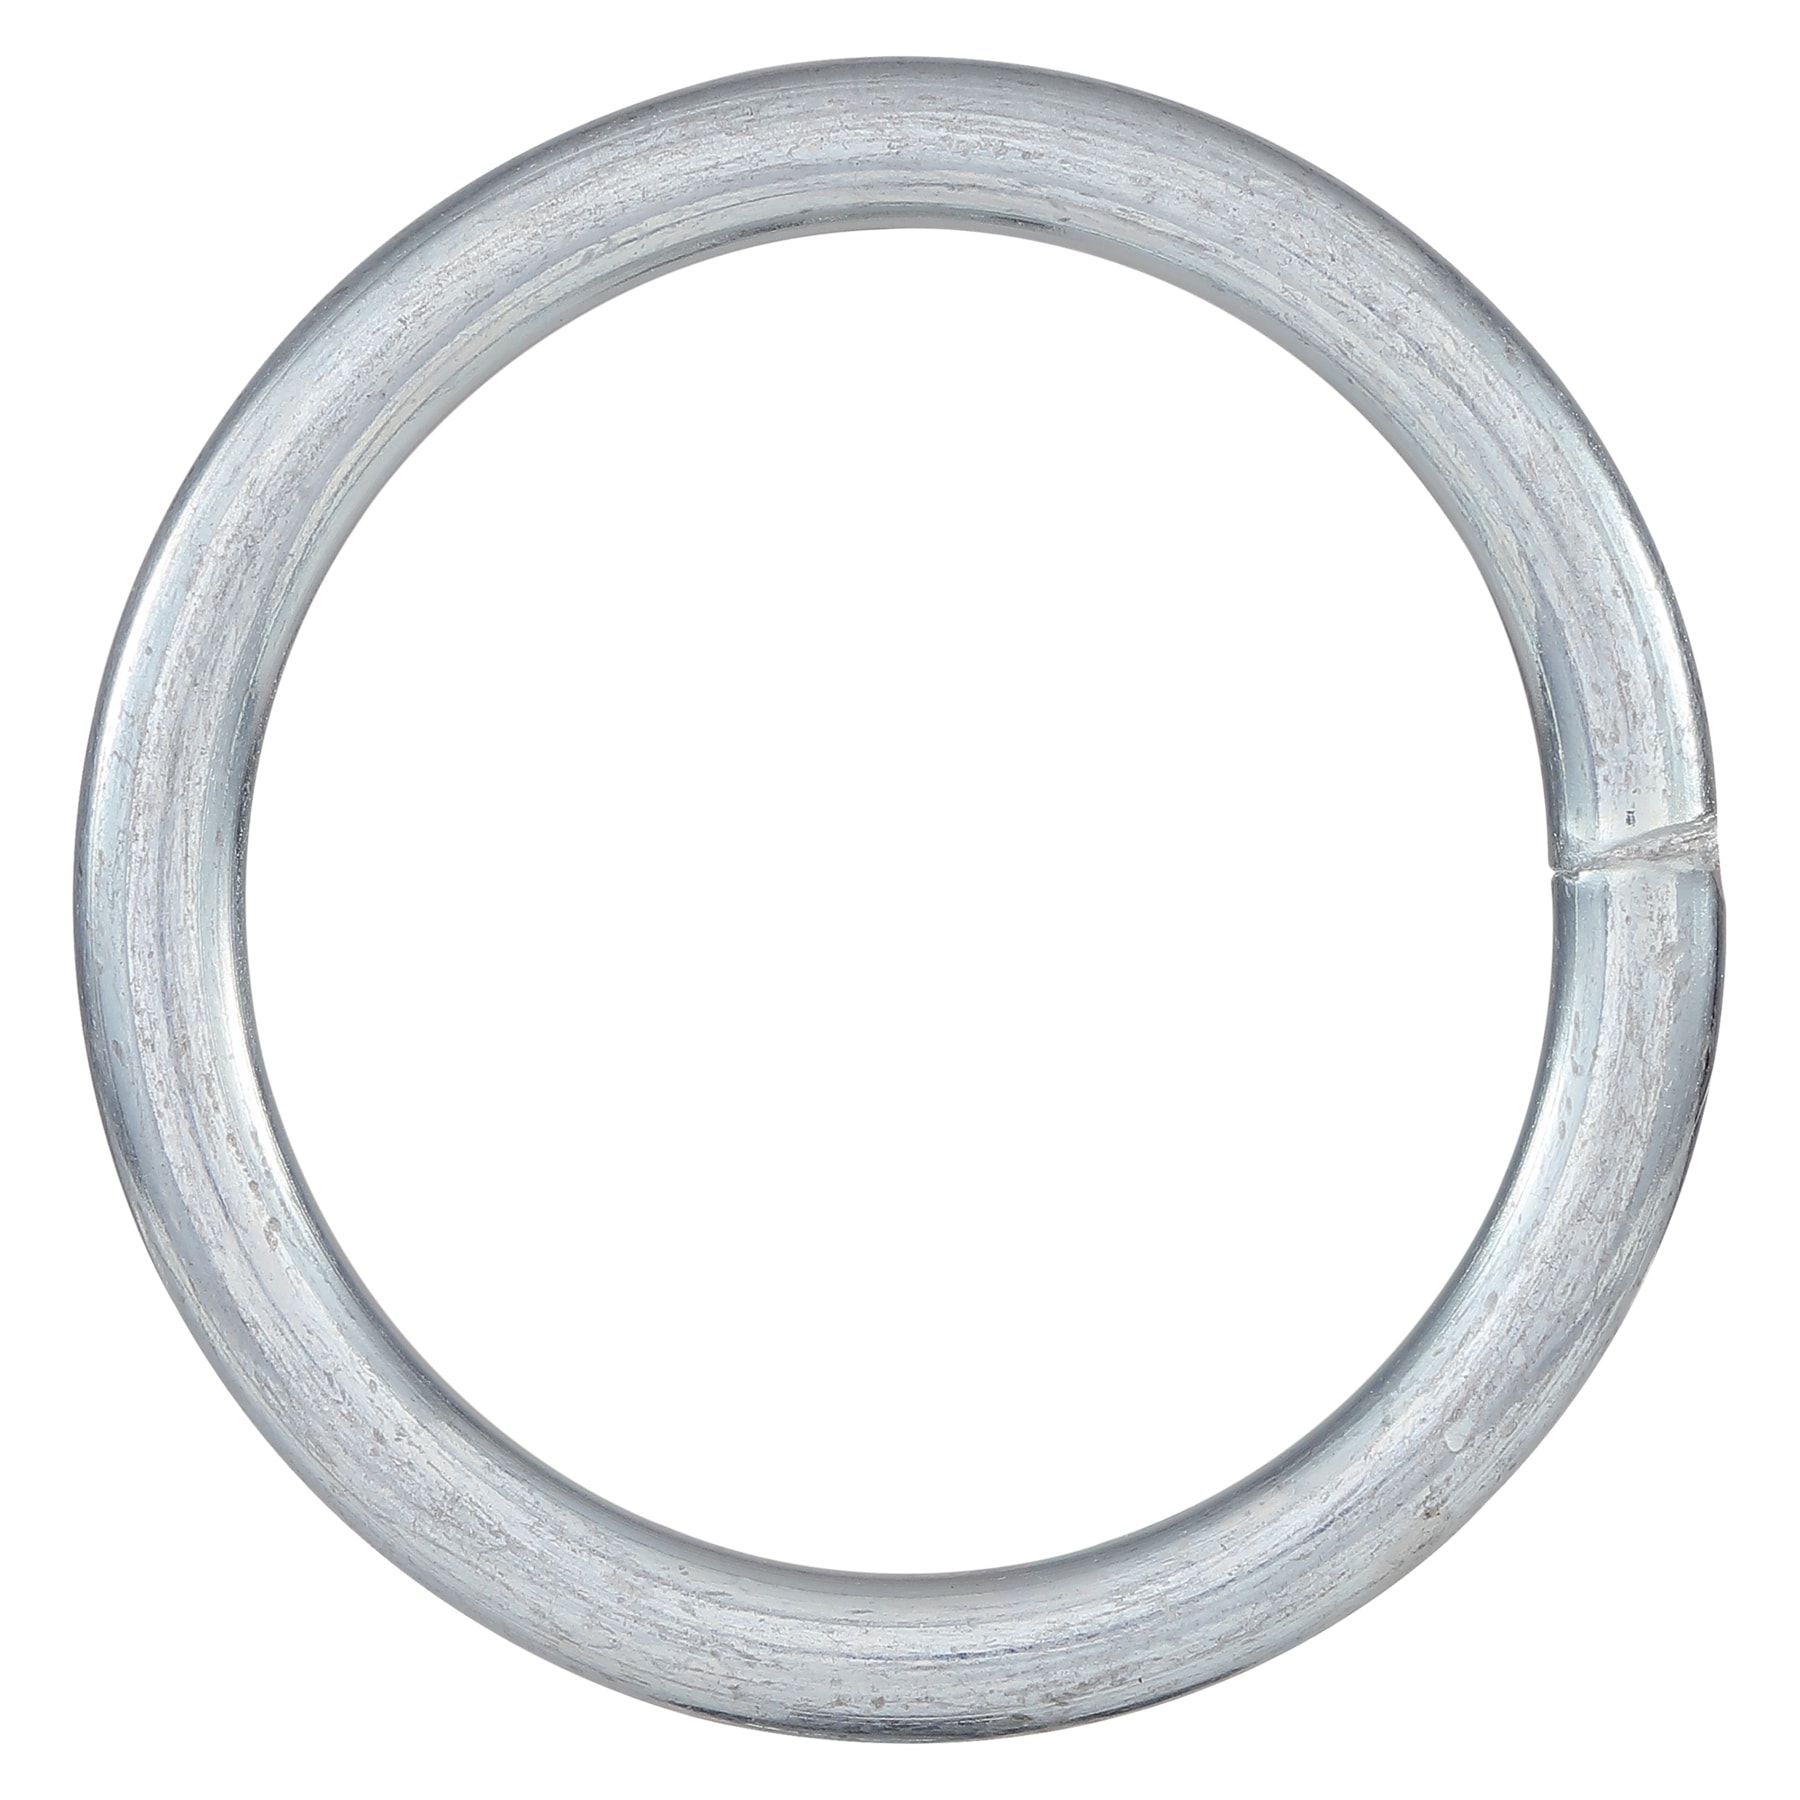 Light Weight Welded D-Rings in Nickel Plated Steel